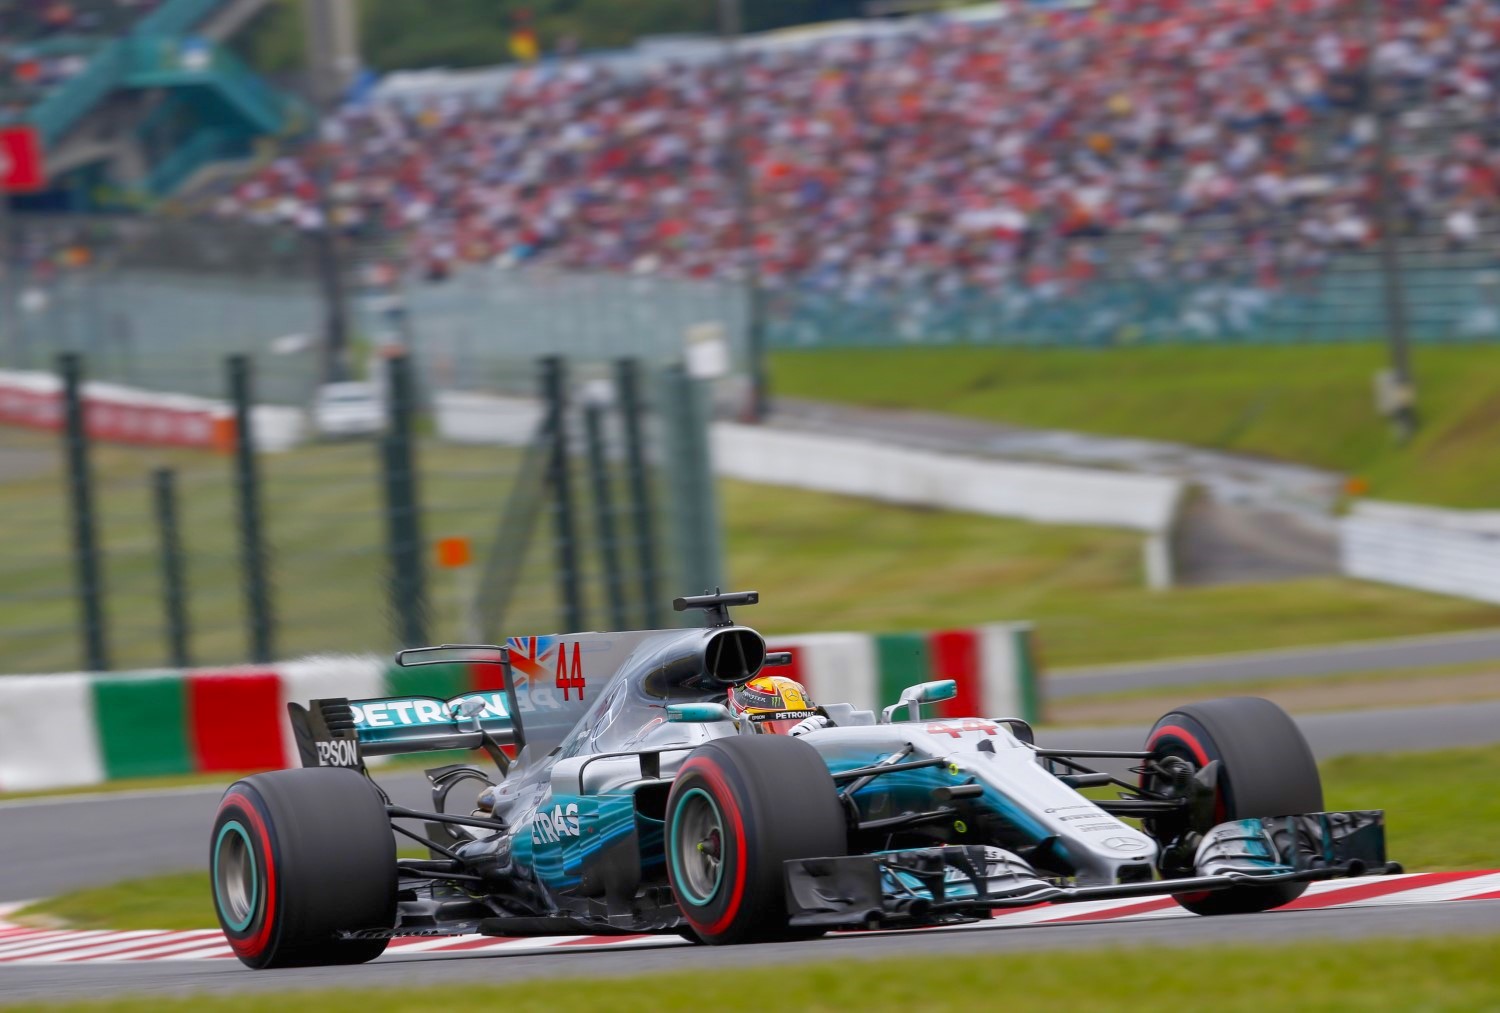 Lewis Hamilton leads in his diesel Mercedes